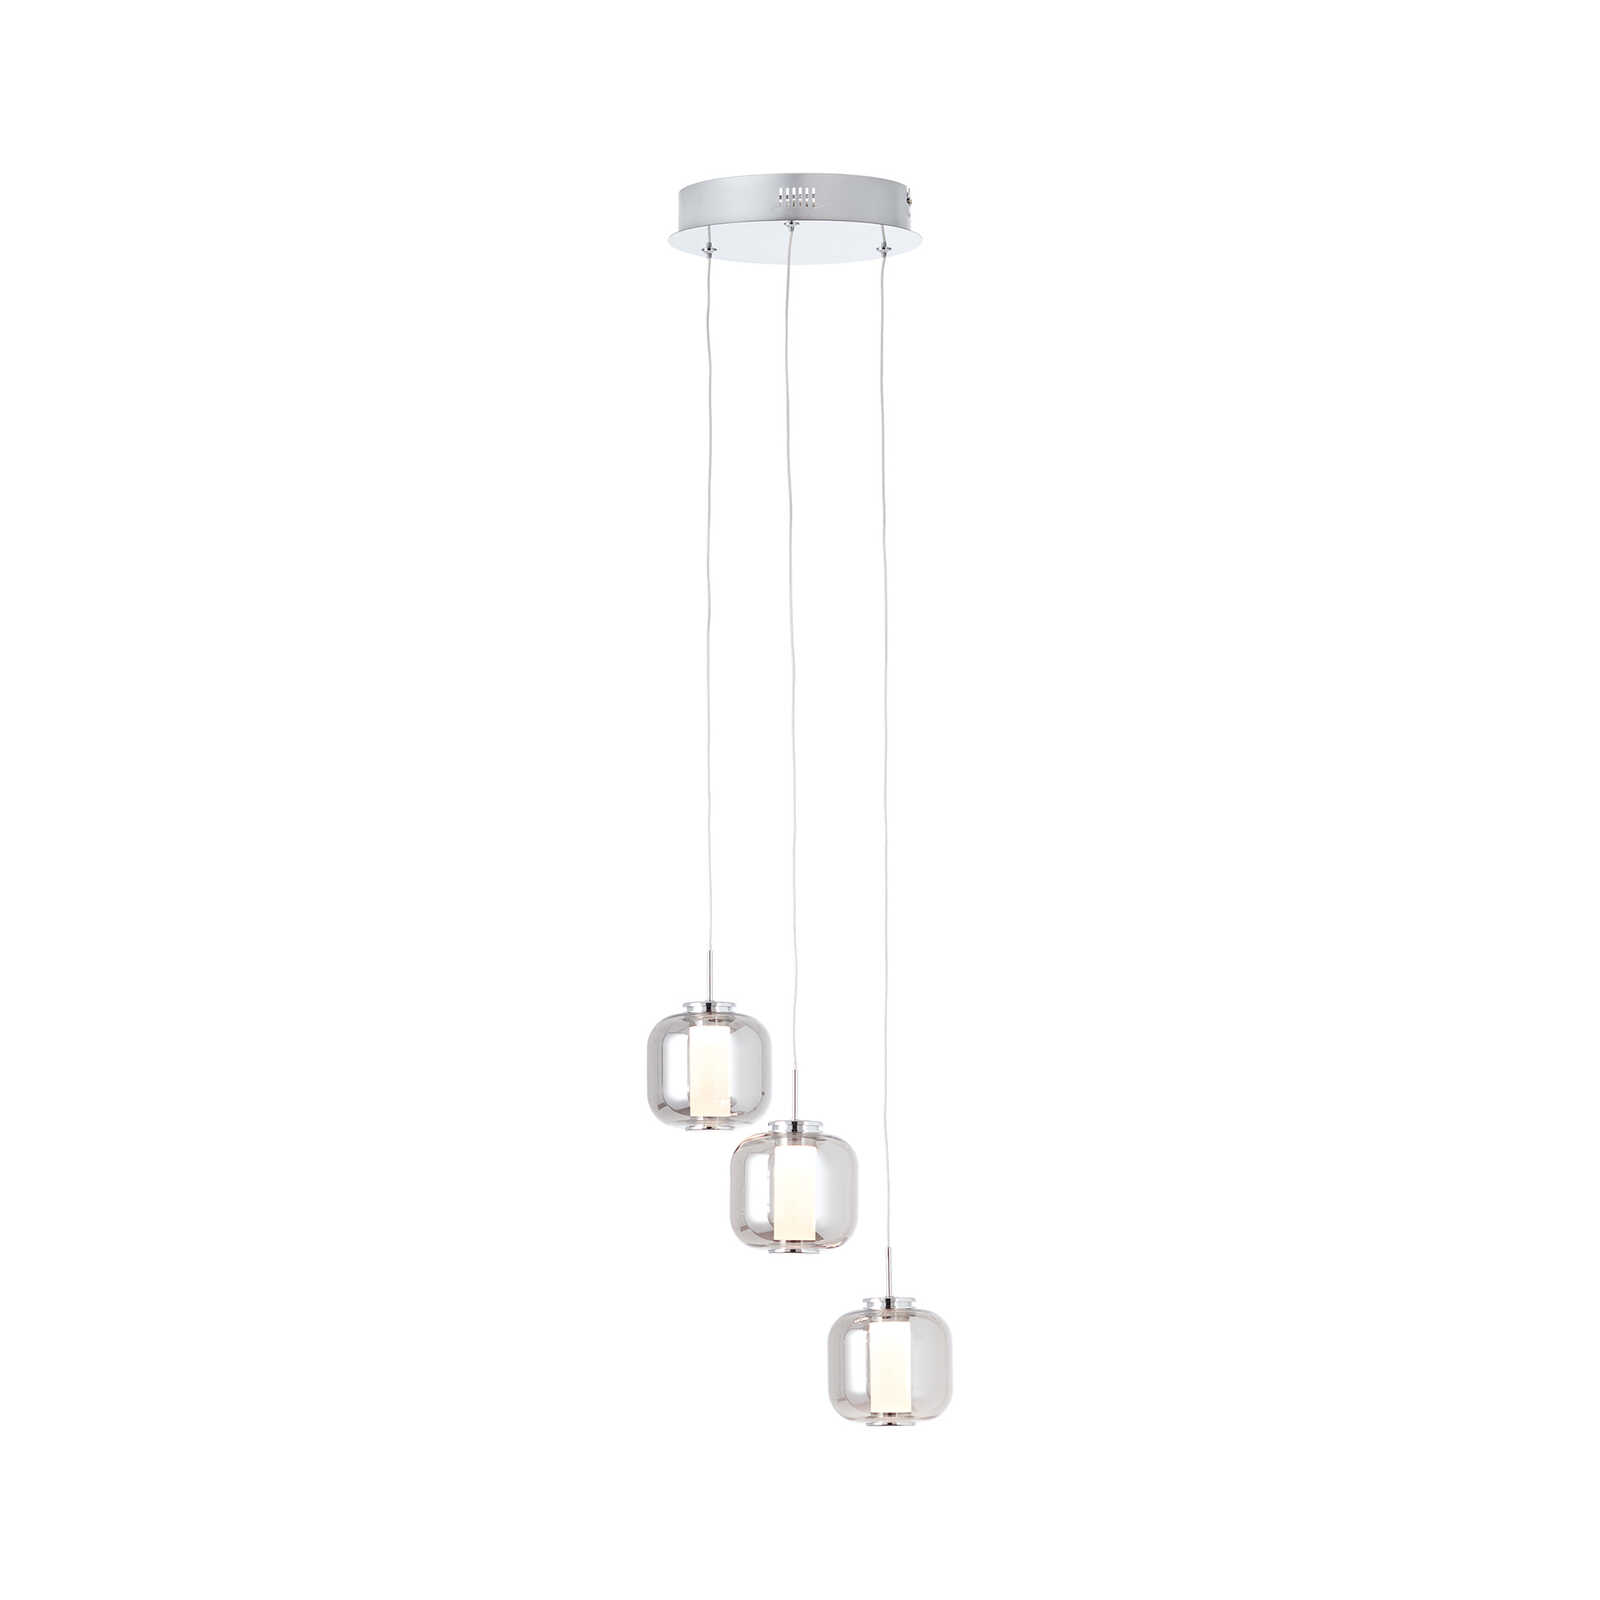 Glazen hanglamp - Martin 2 - Grijs
